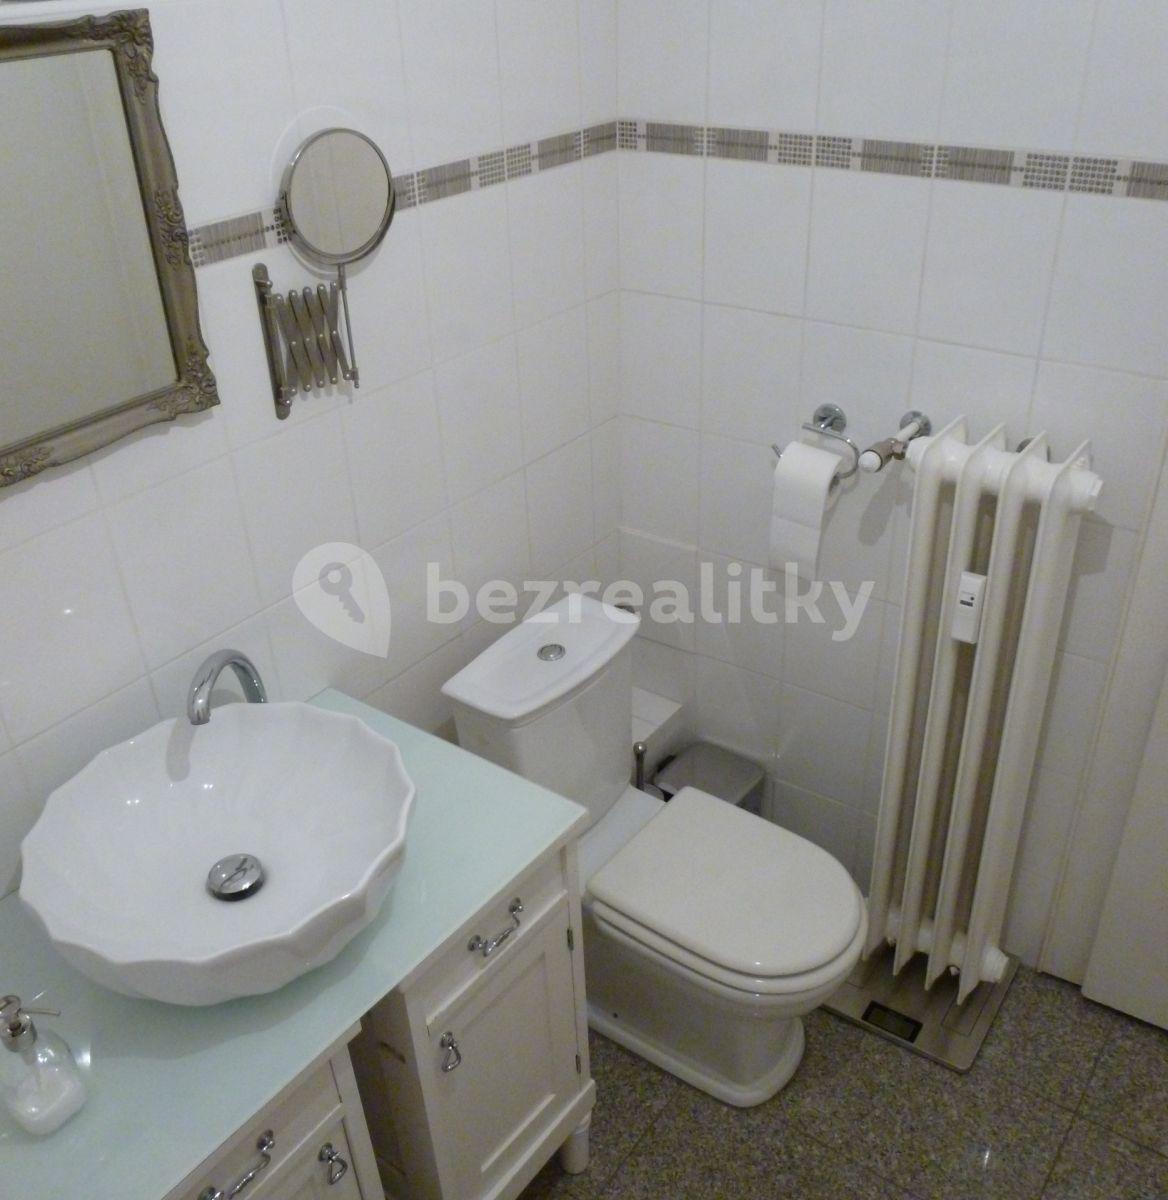 Predaj bytu 1-izbový 30 m², Příční, Brno, Jihomoravský kraj